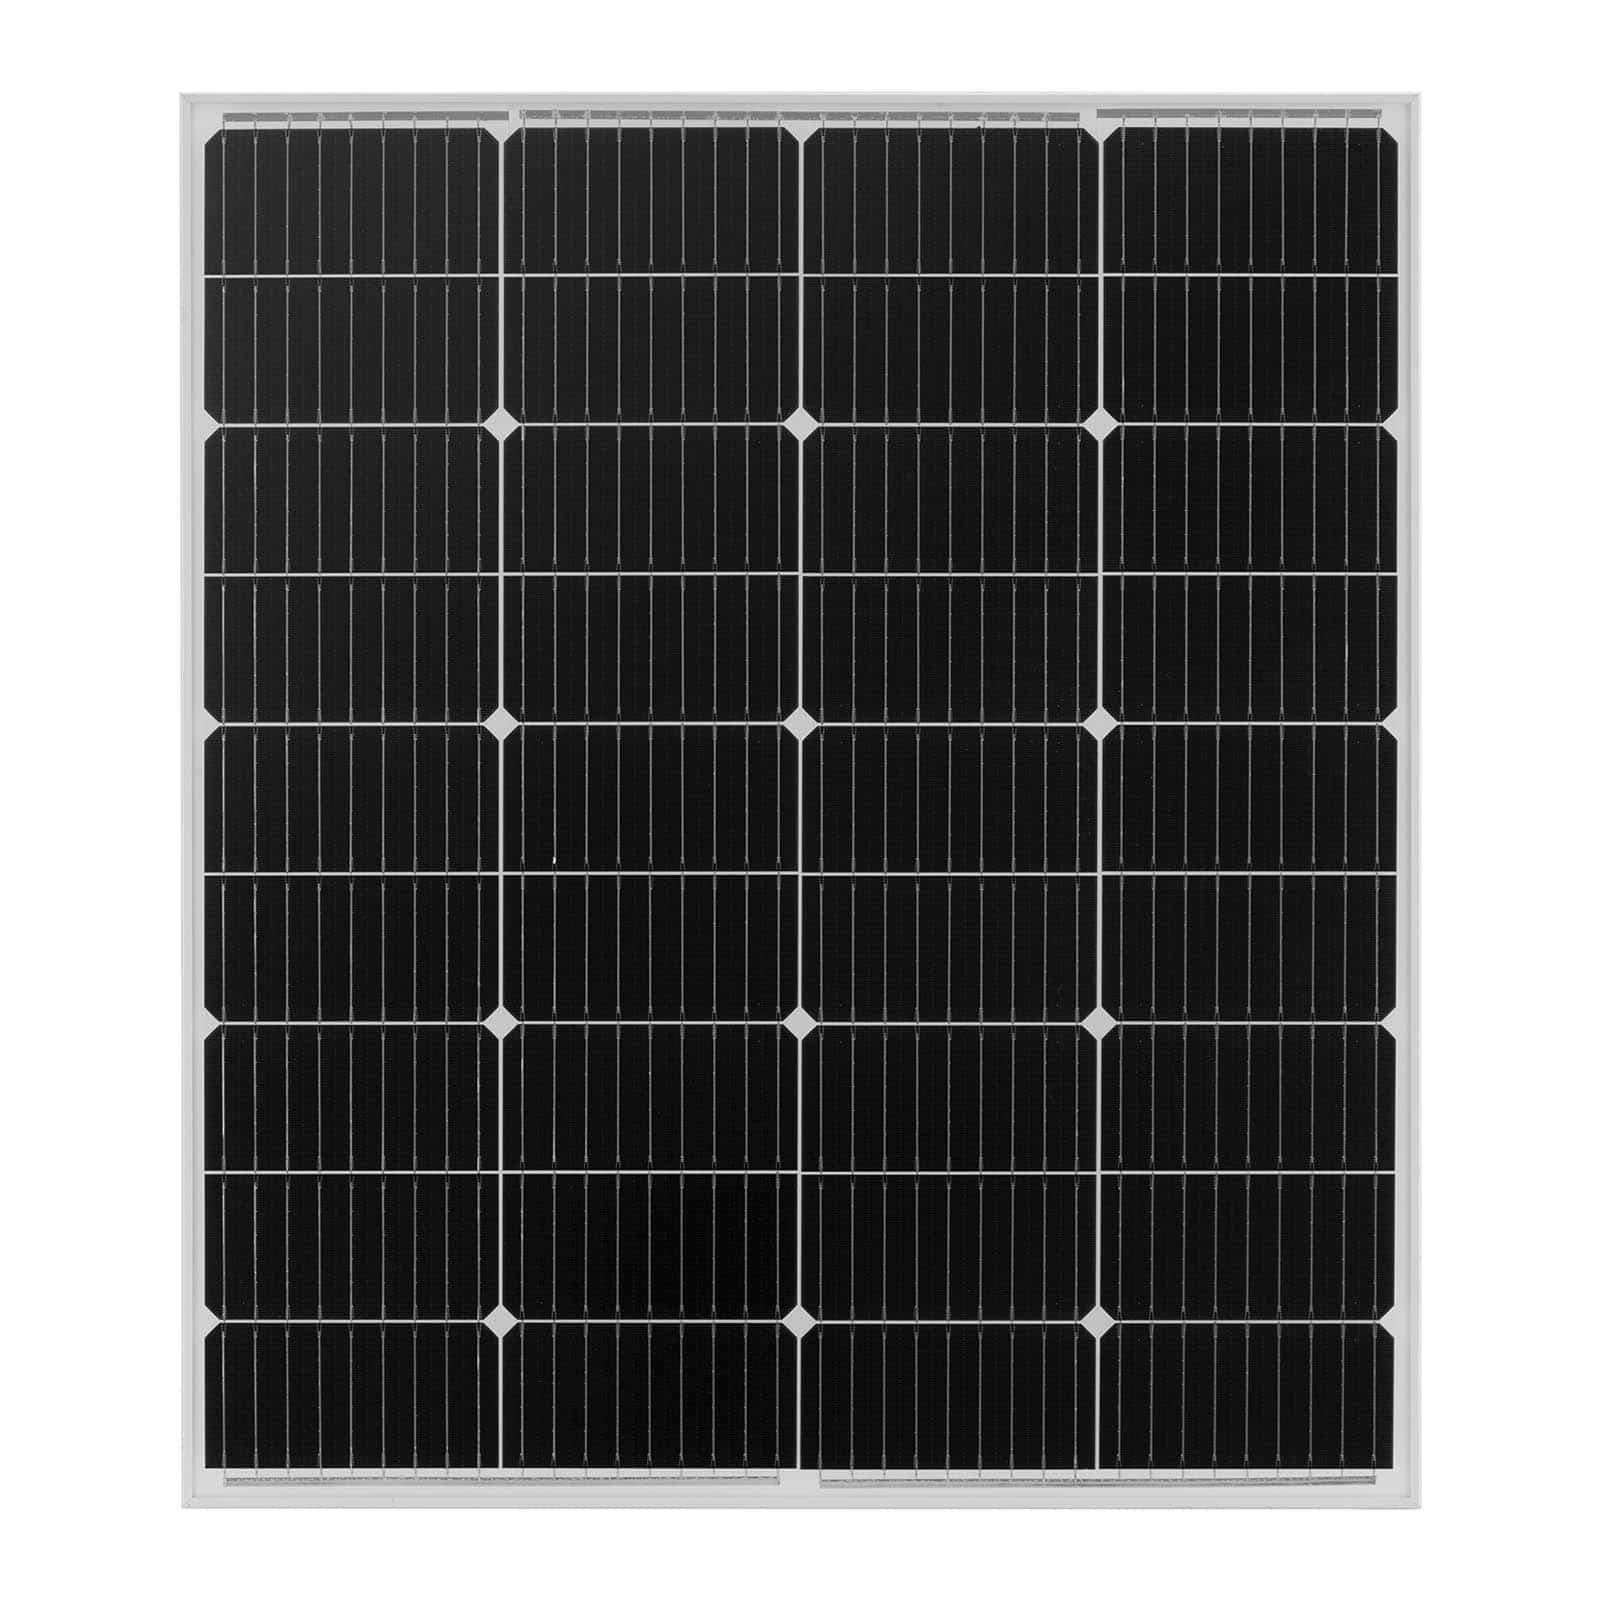 MSW mit Solarmodul Solarpanel 110W Bypass-Technologie Monkristallines